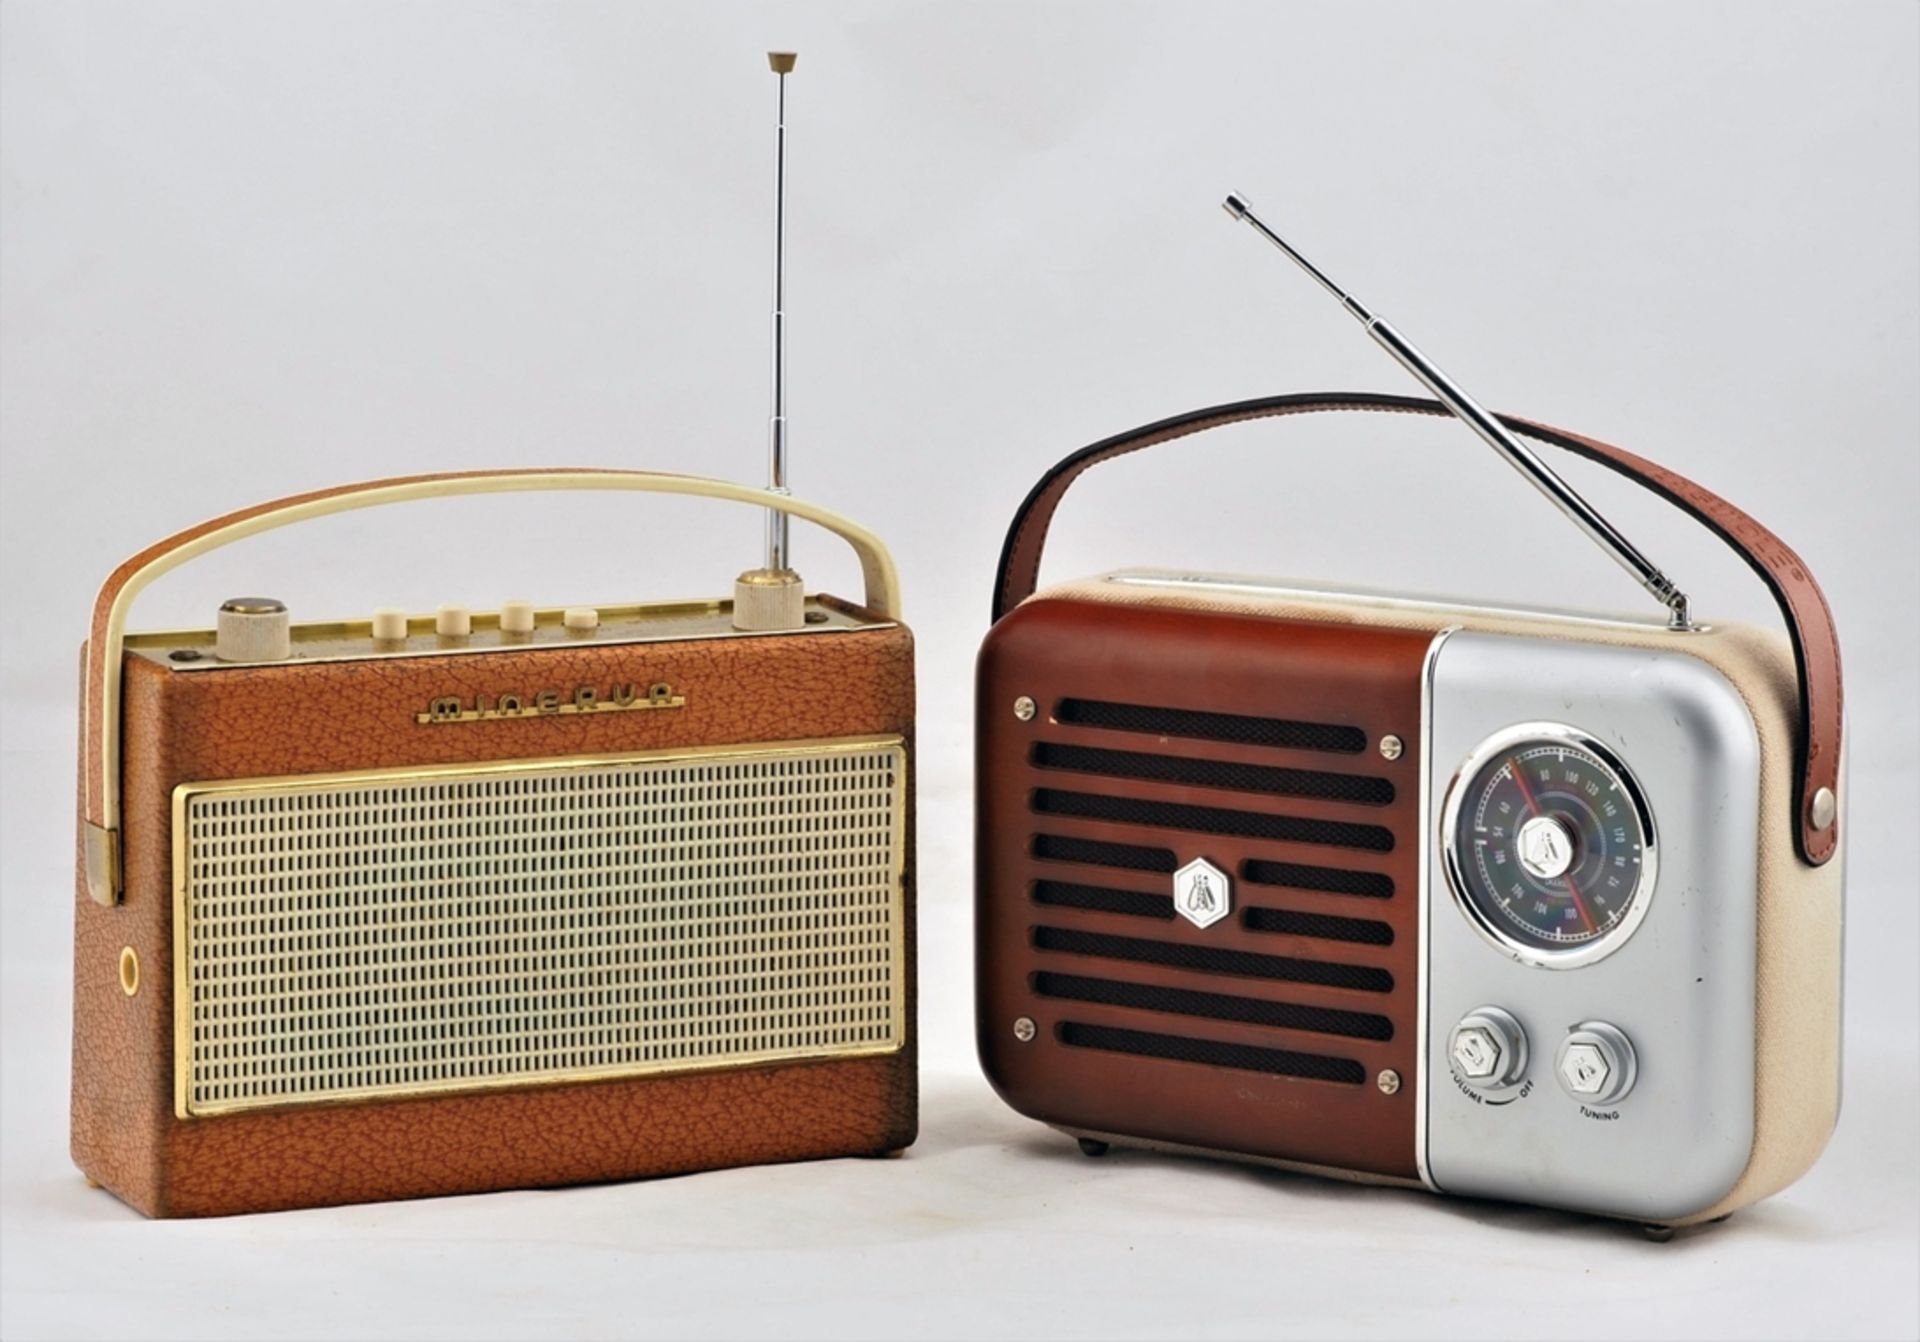 Two portable radios